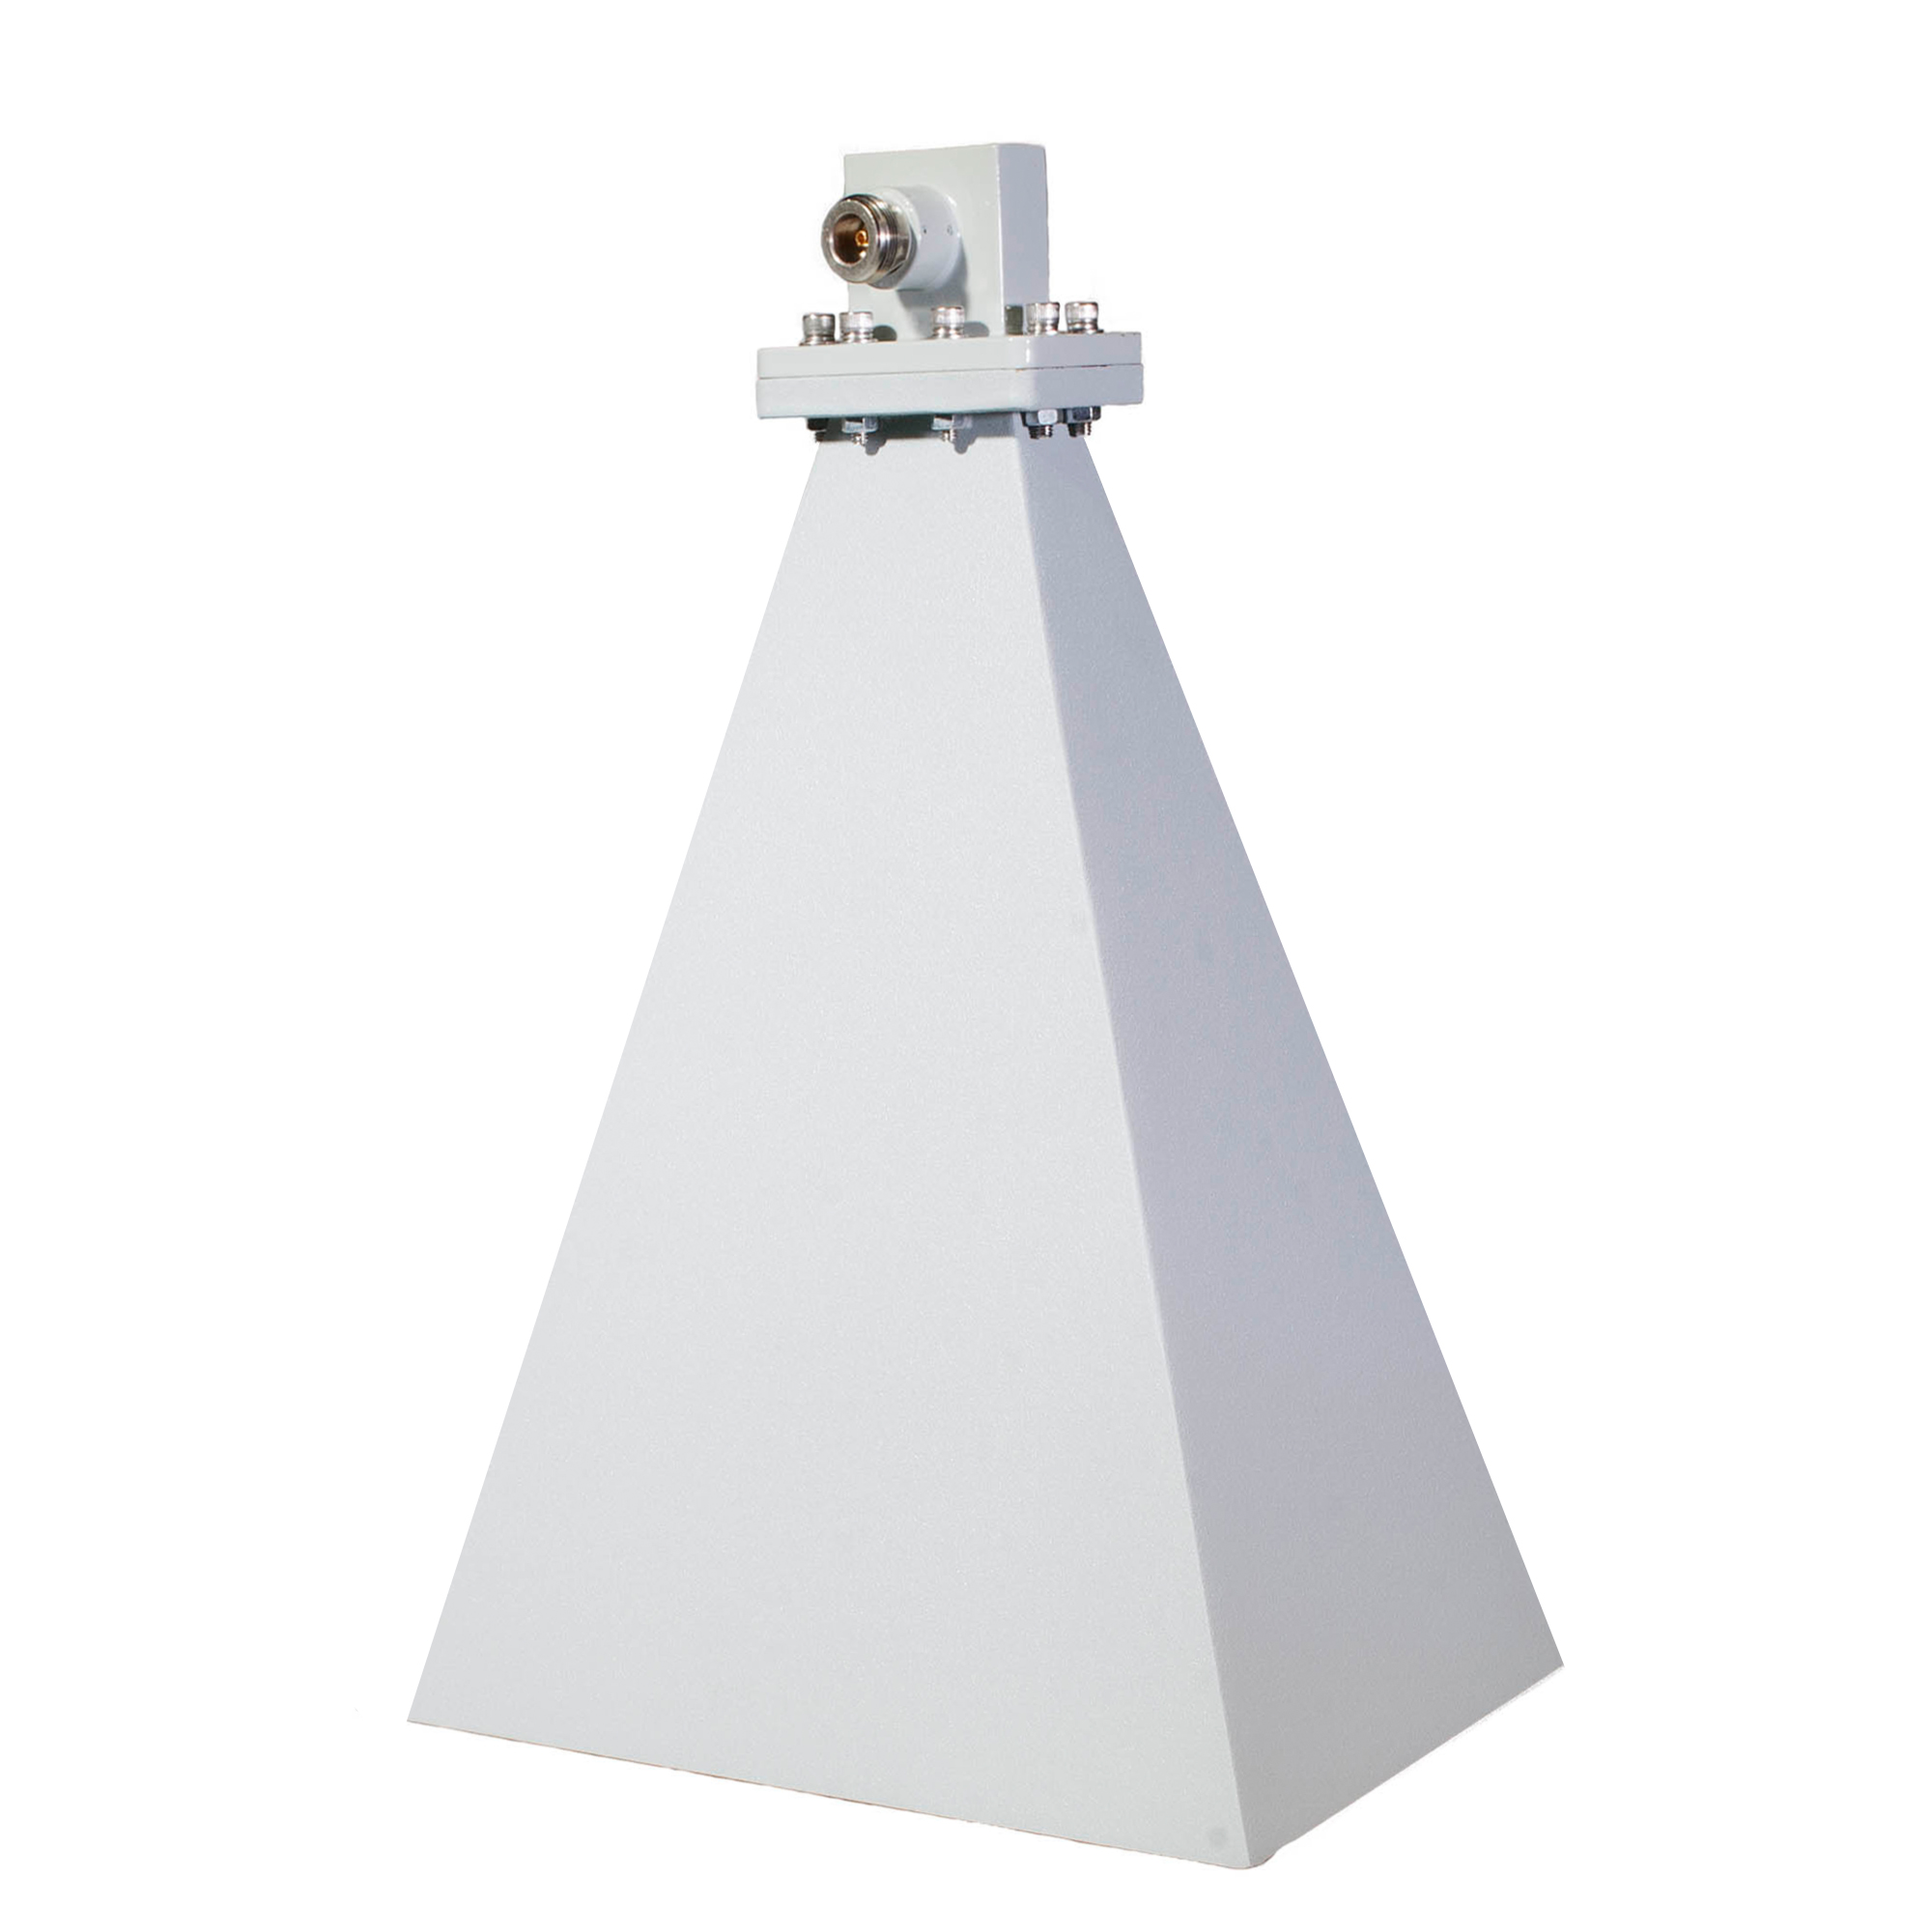 5G 45° Angle Pyramidal Horn Antenna